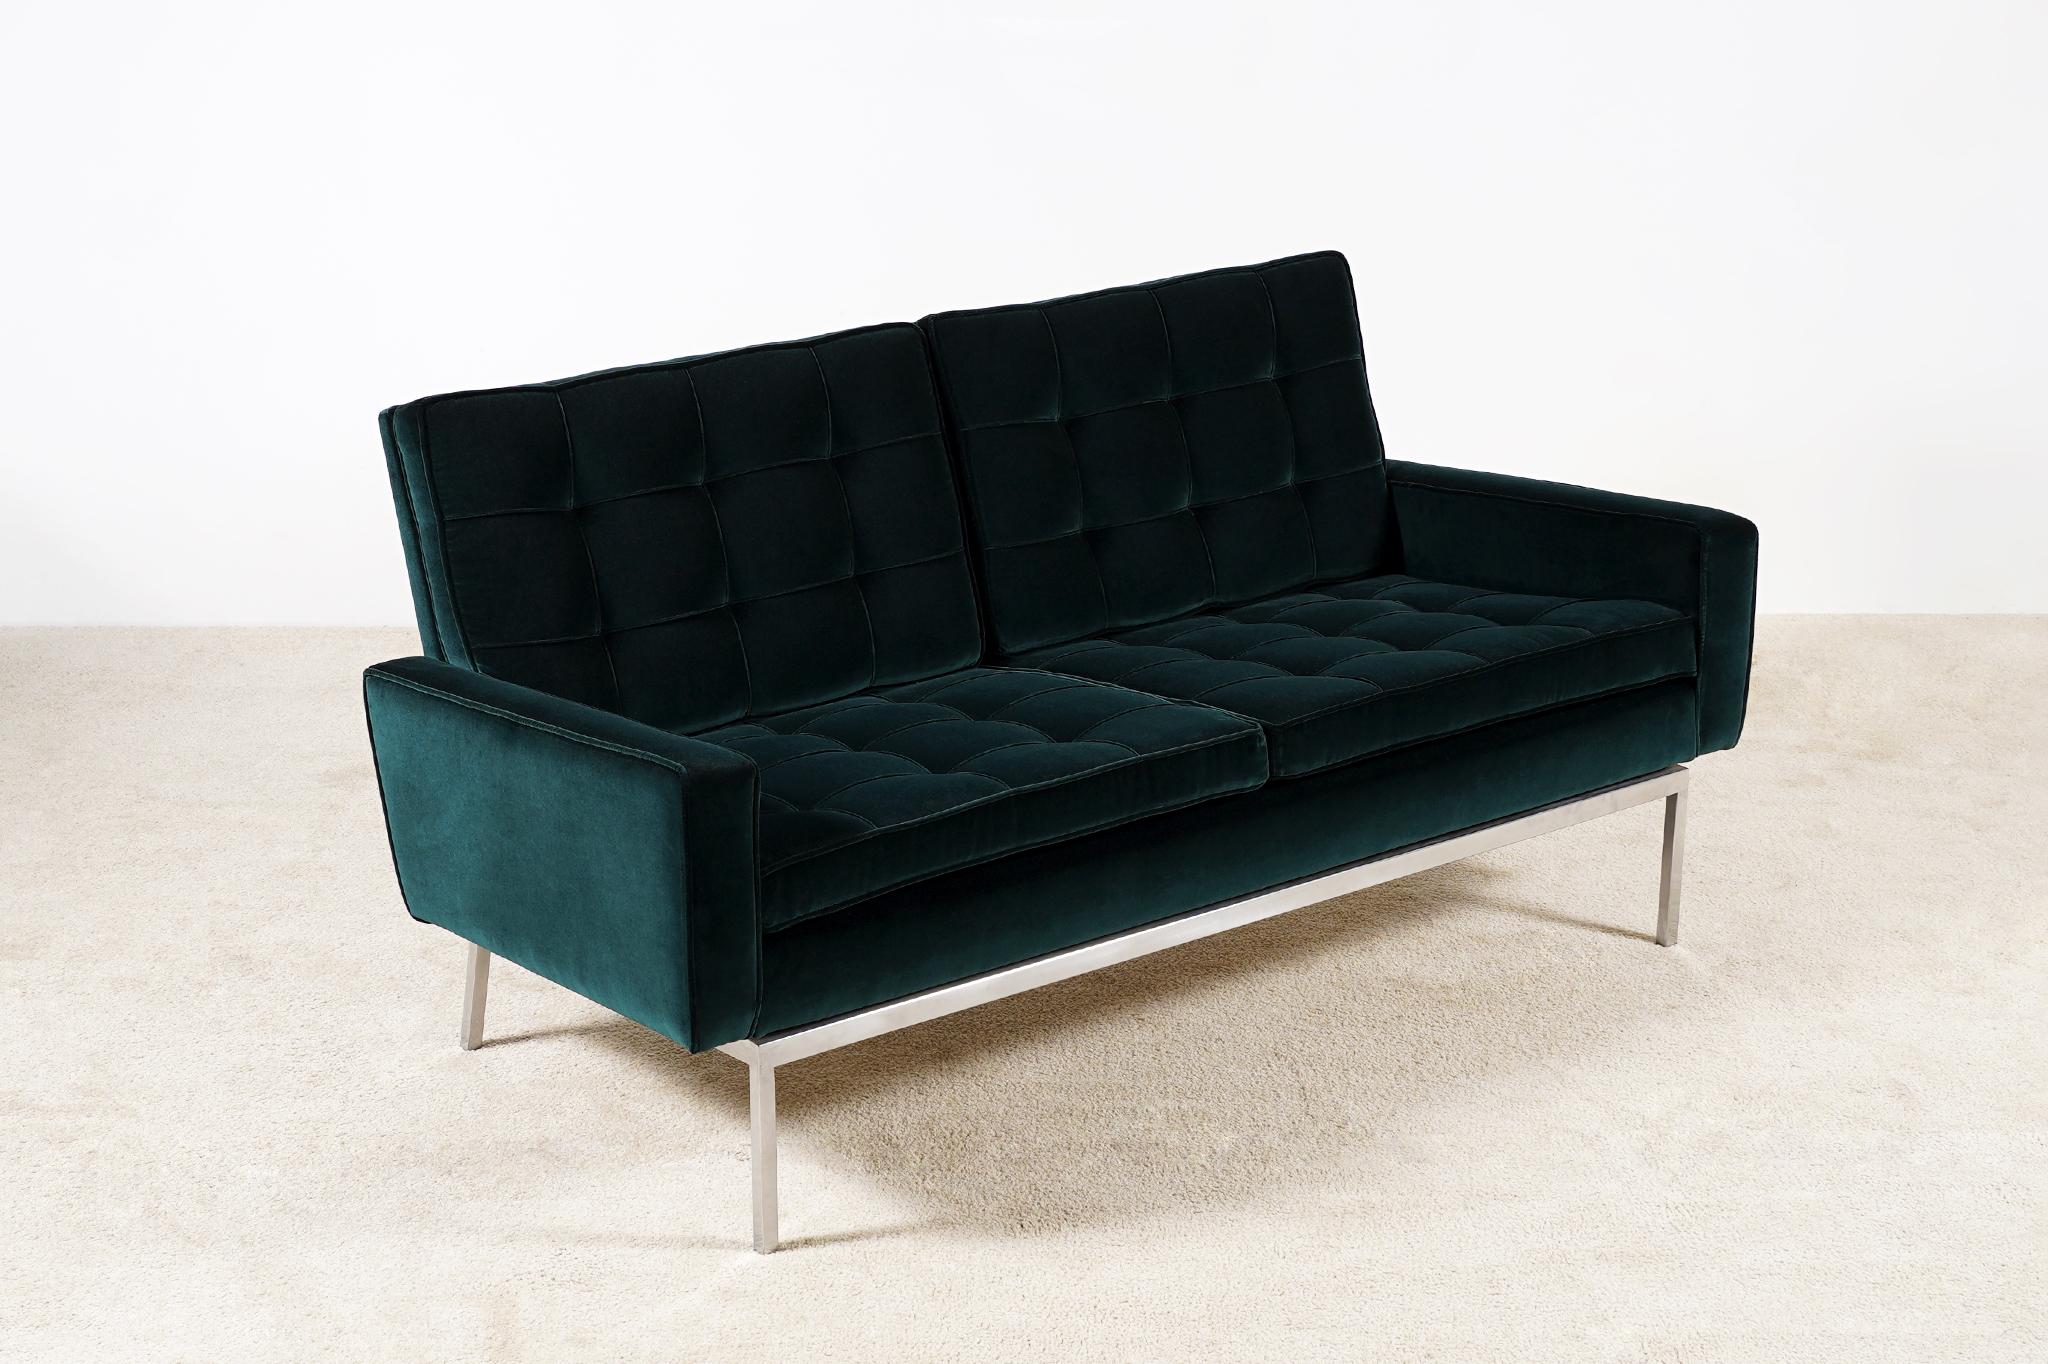 Florence Knoll, Sofa Modell 66A für Knoll, um 1960 (Moderne der Mitte des Jahrhunderts) im Angebot